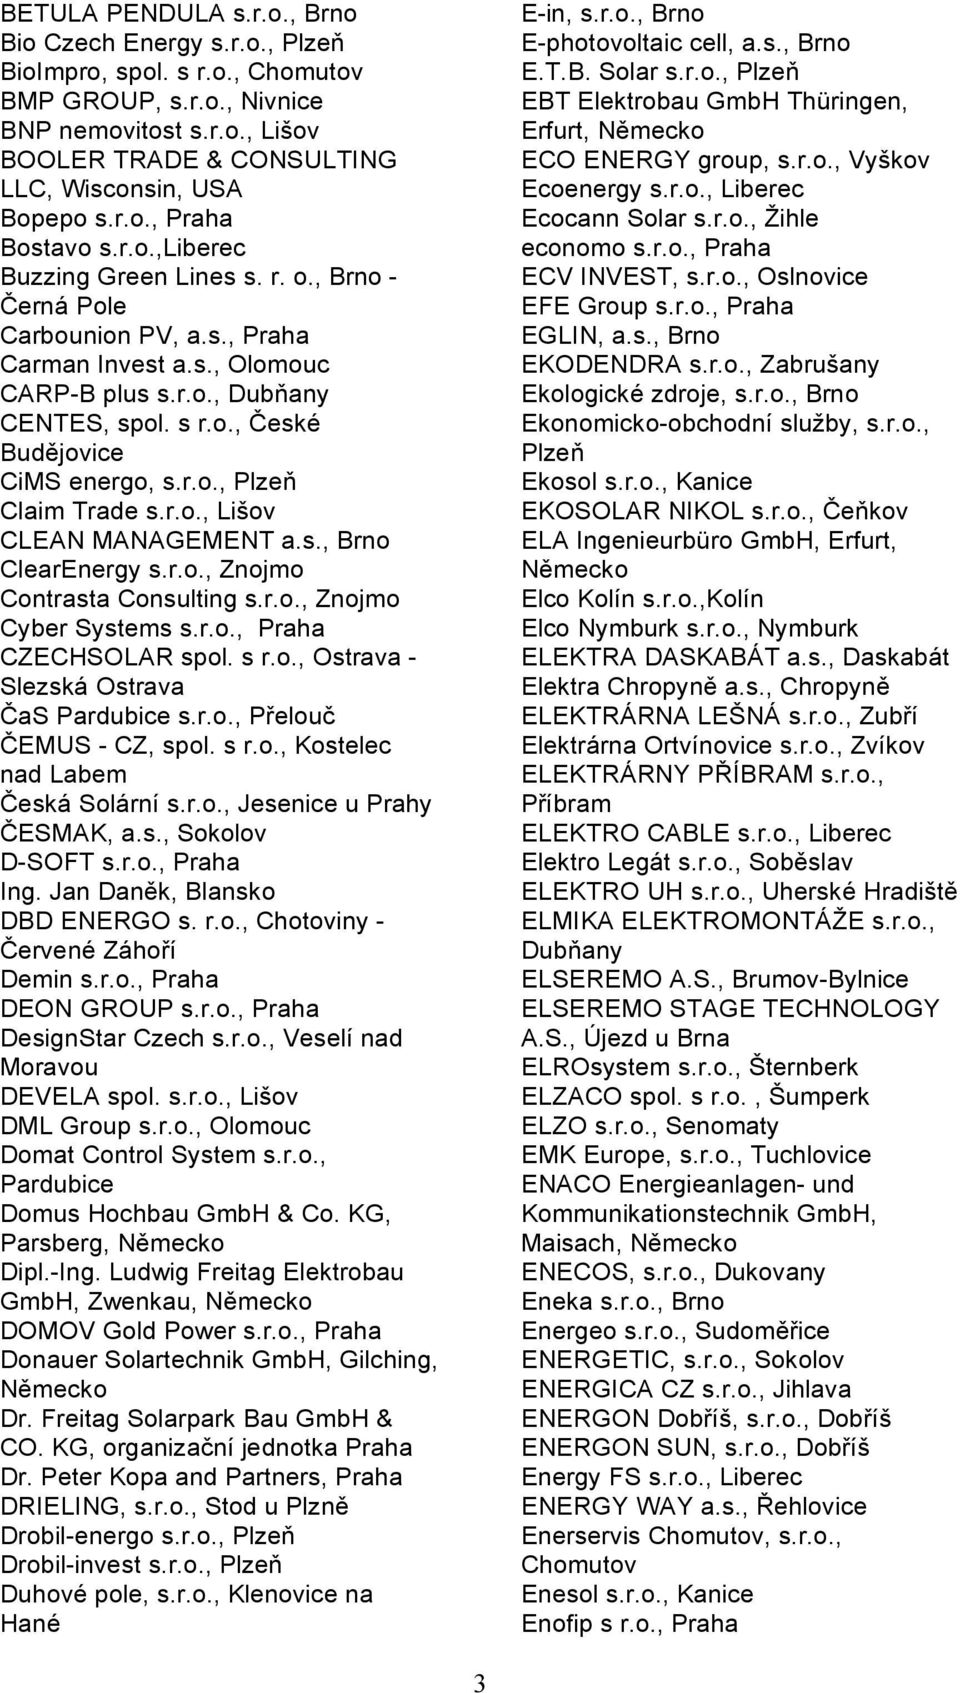 r.o., Plzeň Claim Trade s.r.o., Lišov CLEAN MANAGEMENT a.s., Brno ClearEnergy s.r.o., Znojmo Contrasta Consulting s.r.o., Znojmo Cyber Systems s.r.o., Praha CZECHSOLAR spol. s r.o., Ostrava - Slezská Ostrava ČaS Pardubice s.